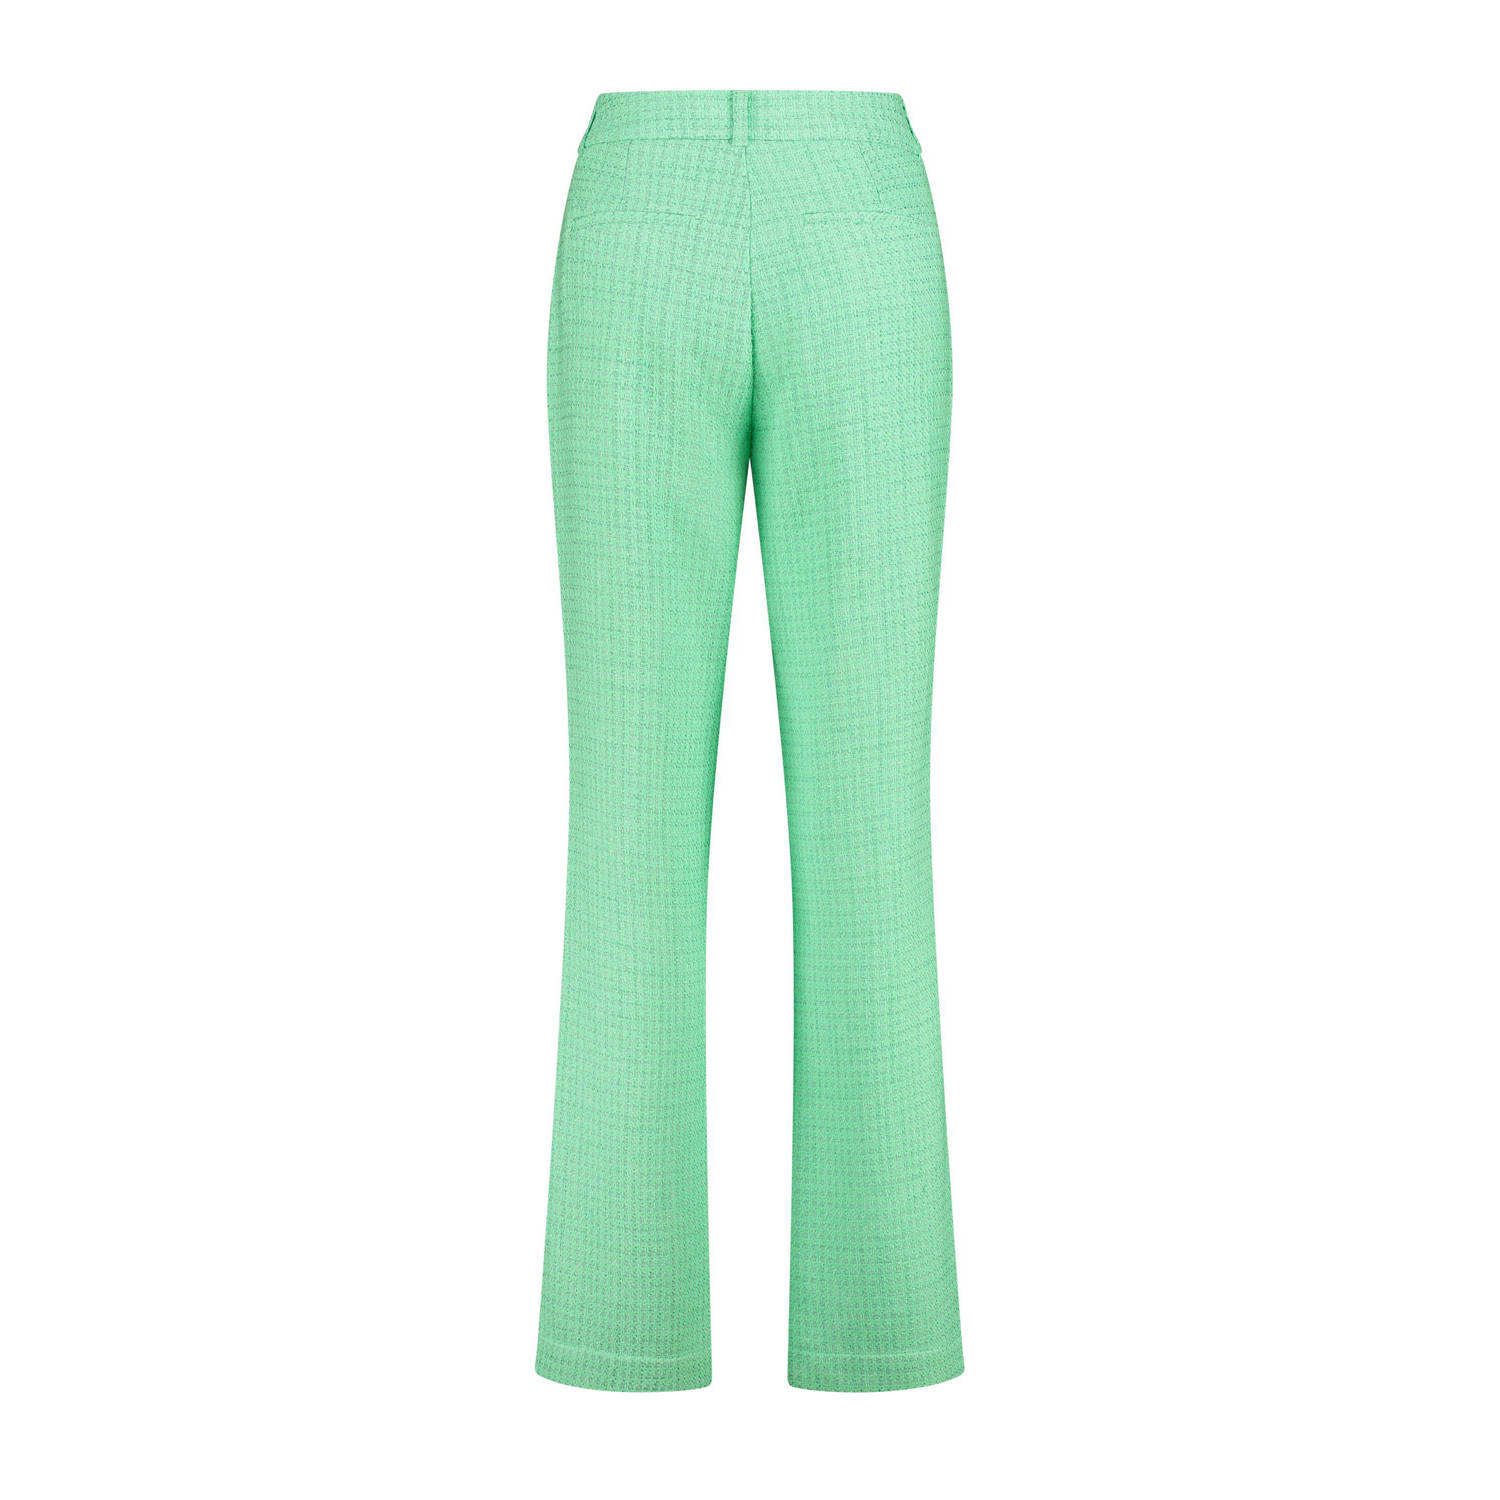 Expresso geruite wide leg pantalon groen